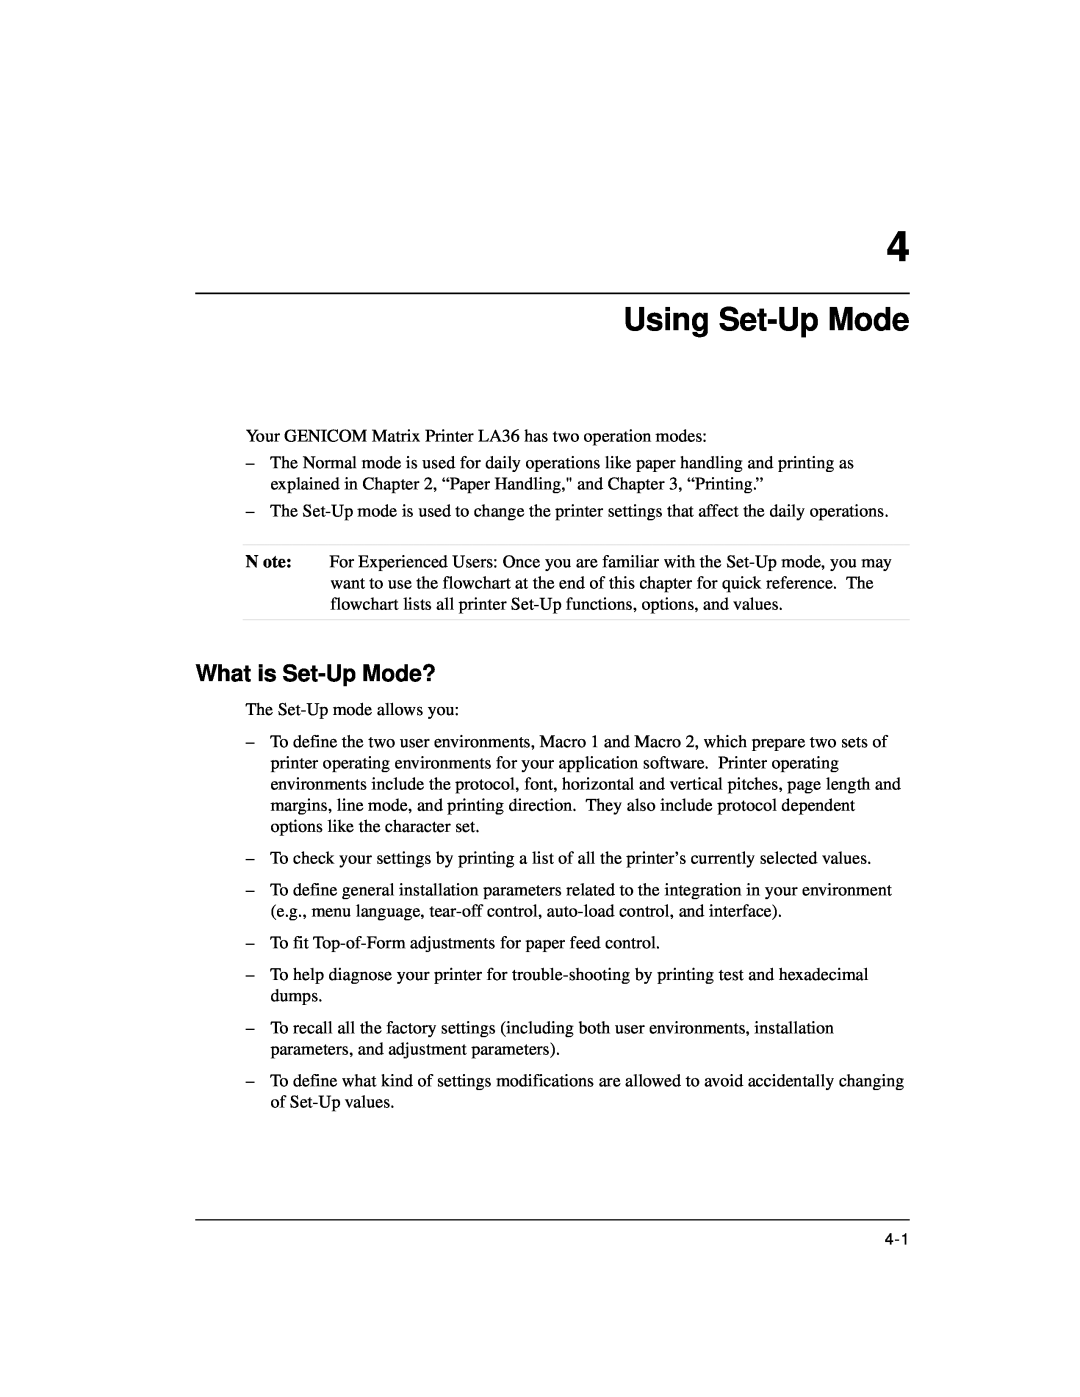 Genicom LA36 manual Using Set-Up Mode, What is Set-Up Mode? 